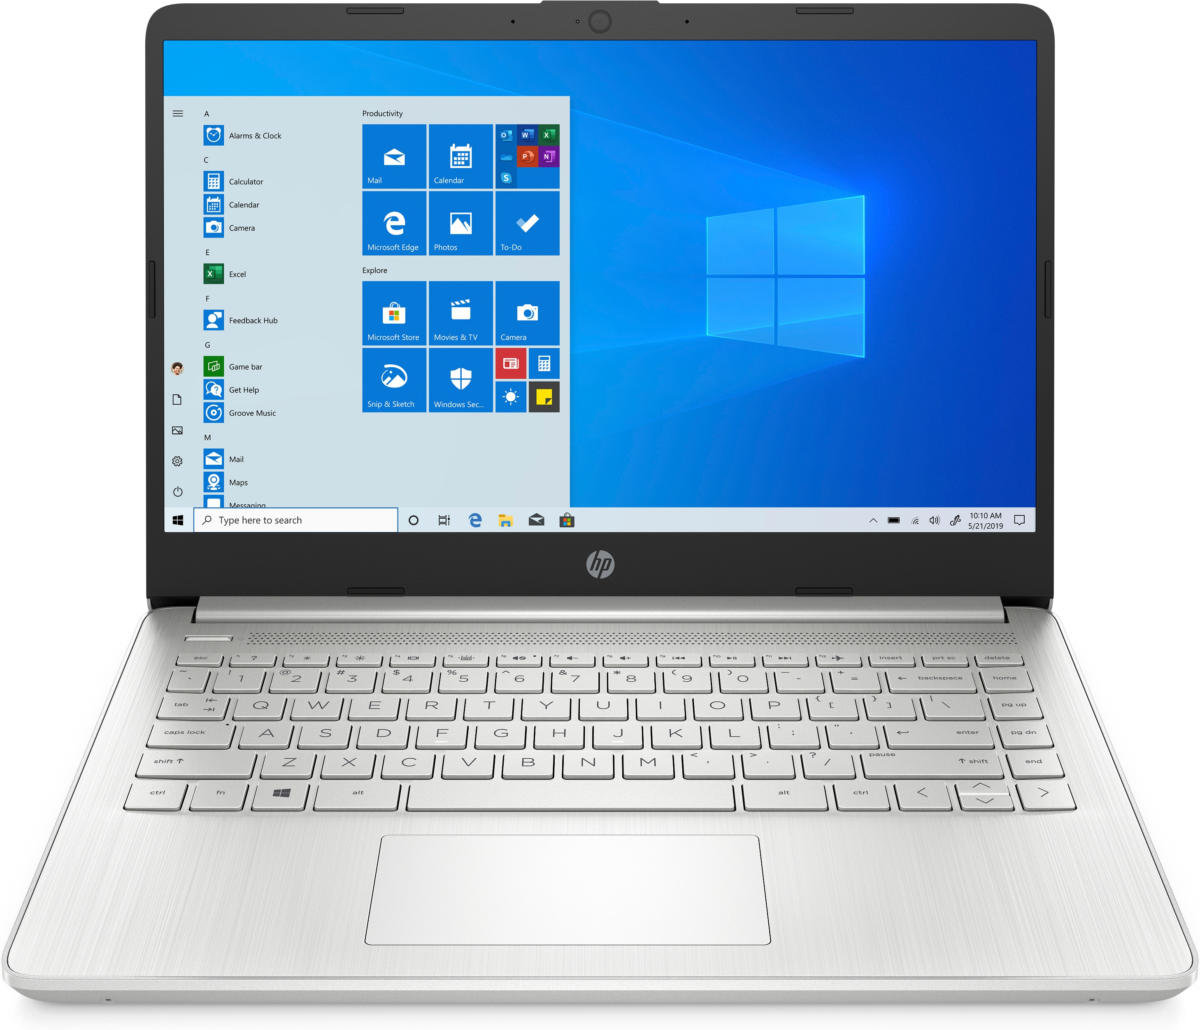 HP 14 FHD Laptop Computer, AMD Ryzen 3-3250, 4GB RAM, 128GB SSD, Silver,  Windows 11 (S mode), 14-fq0110wm 